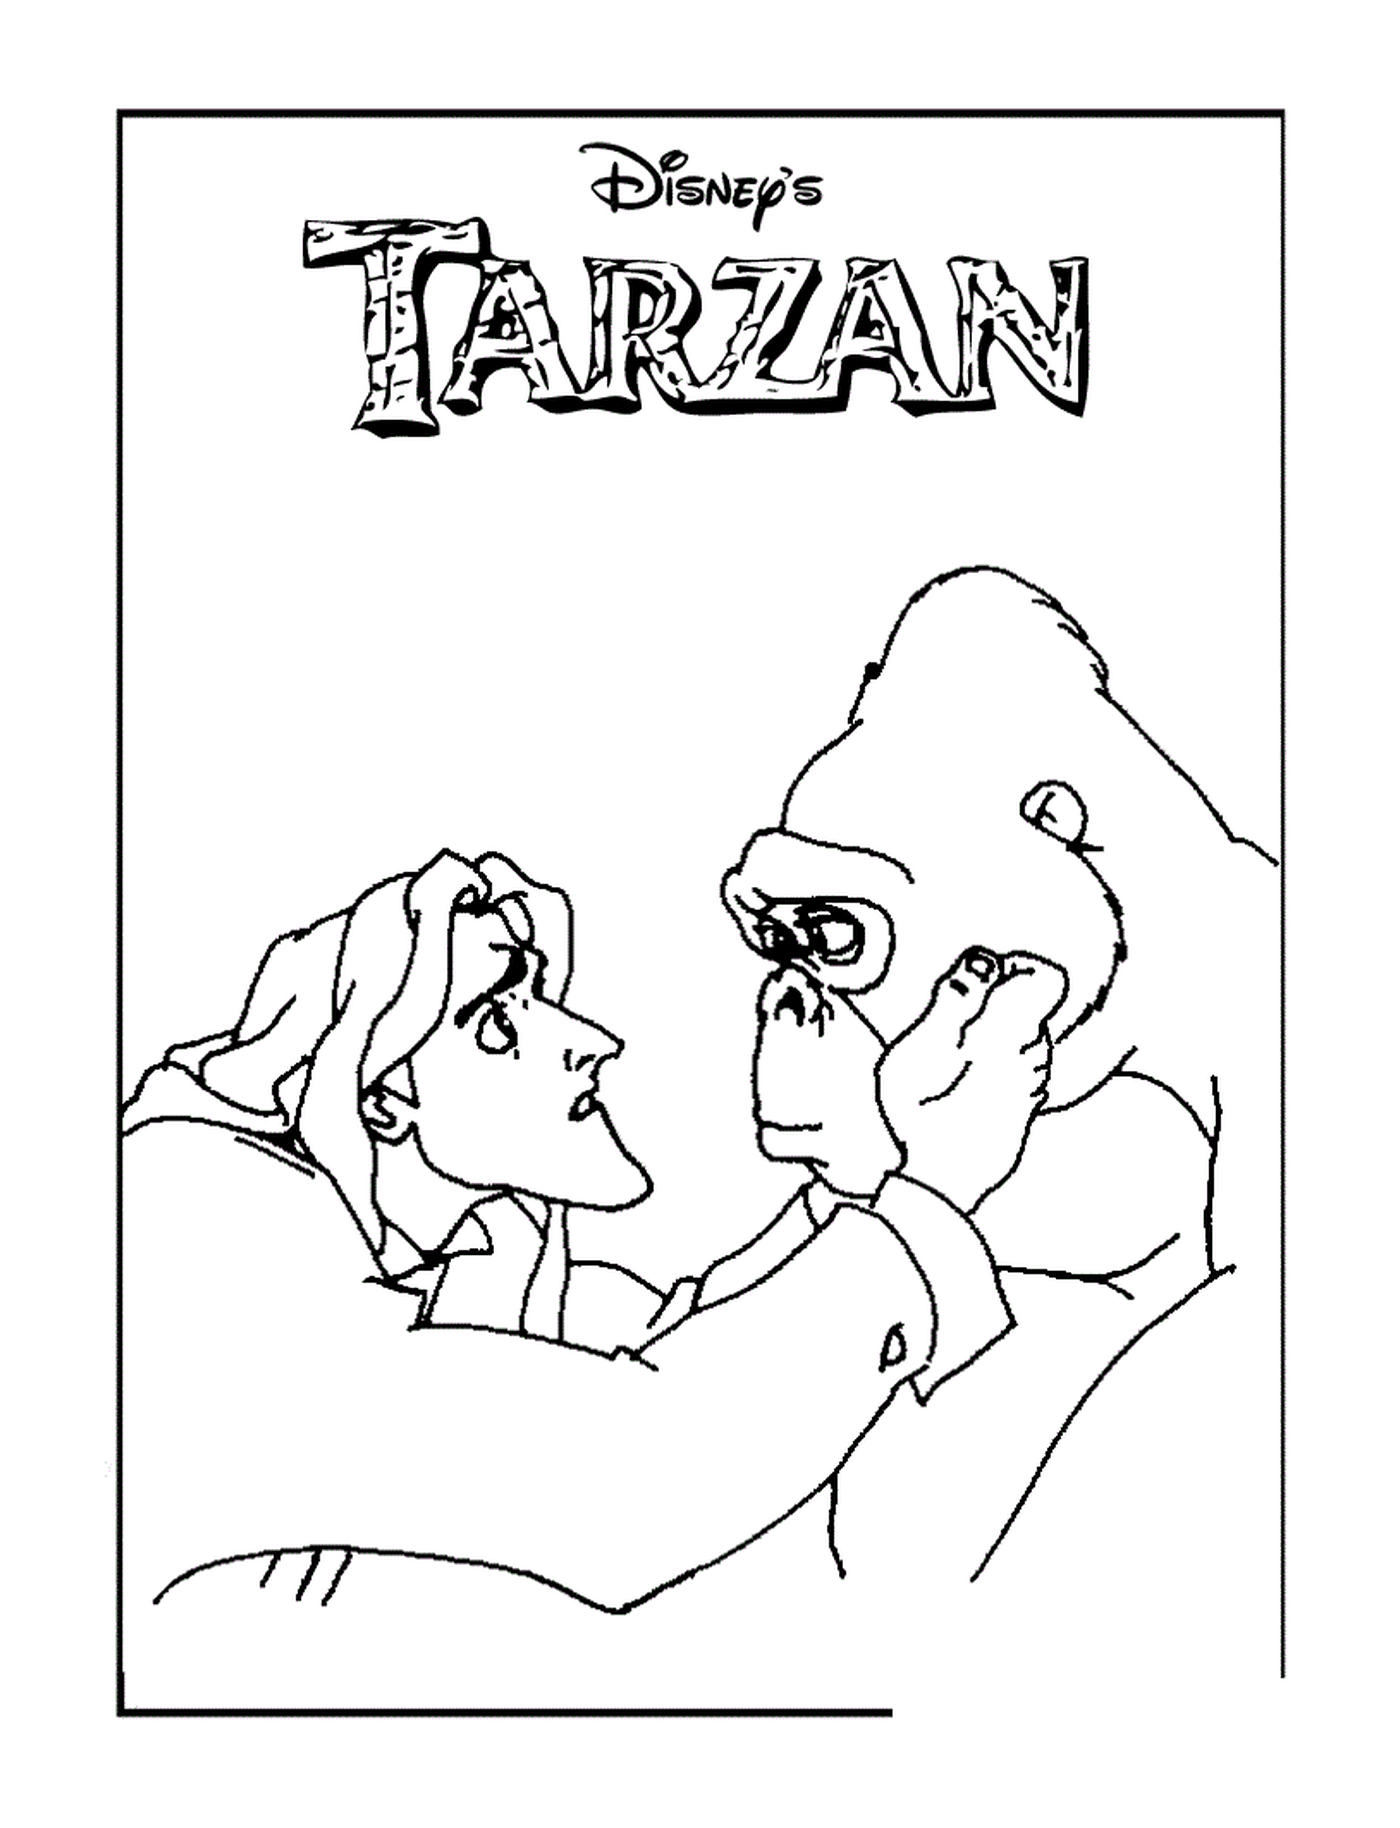  Tarzan e gorila 